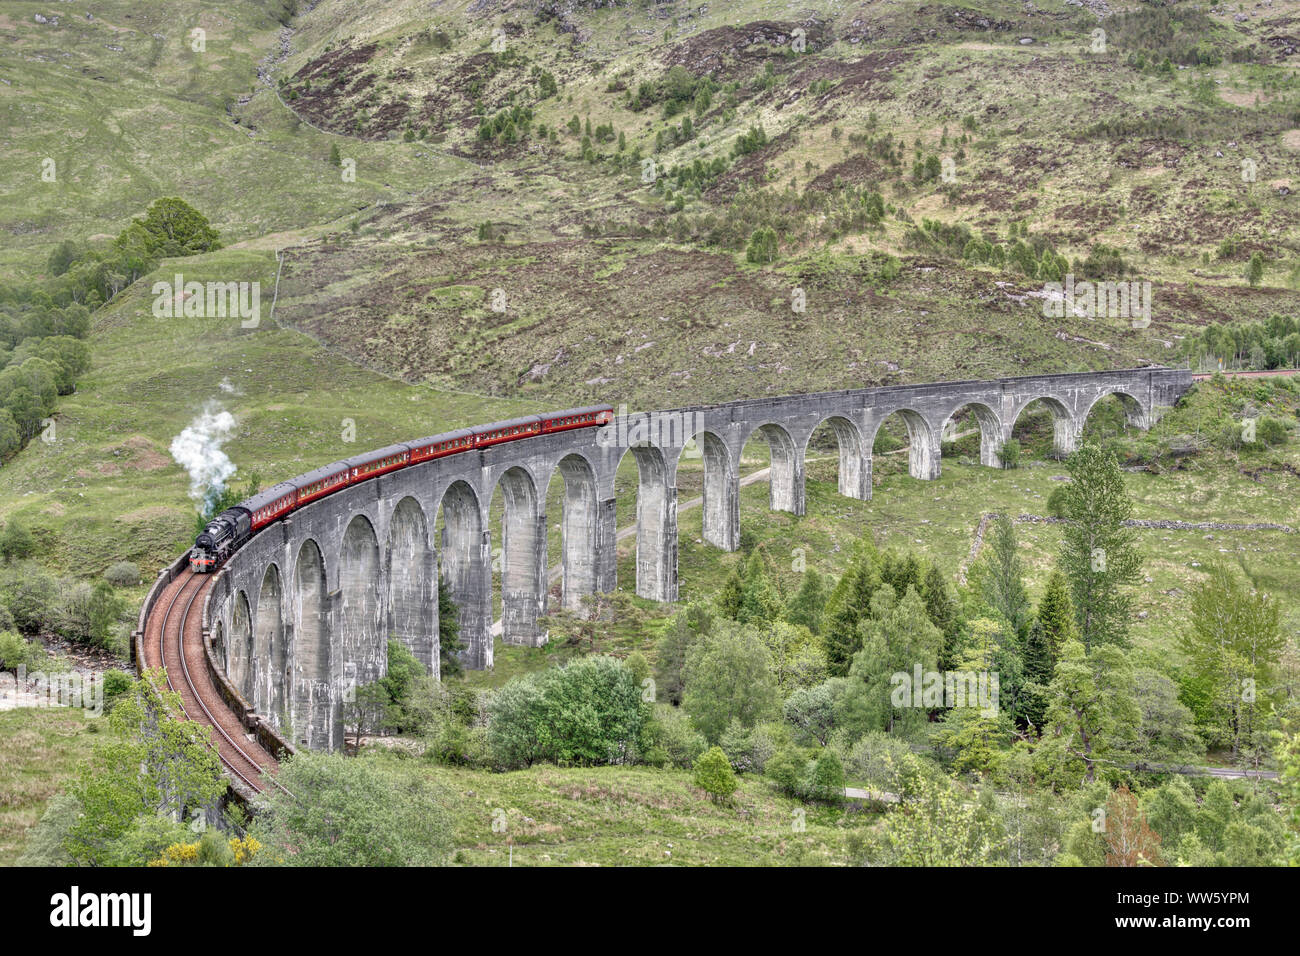 England, Scotland, Highlands, Glenvinnan, Highlands, train crossing bridge, steam locomotive Stock Photo